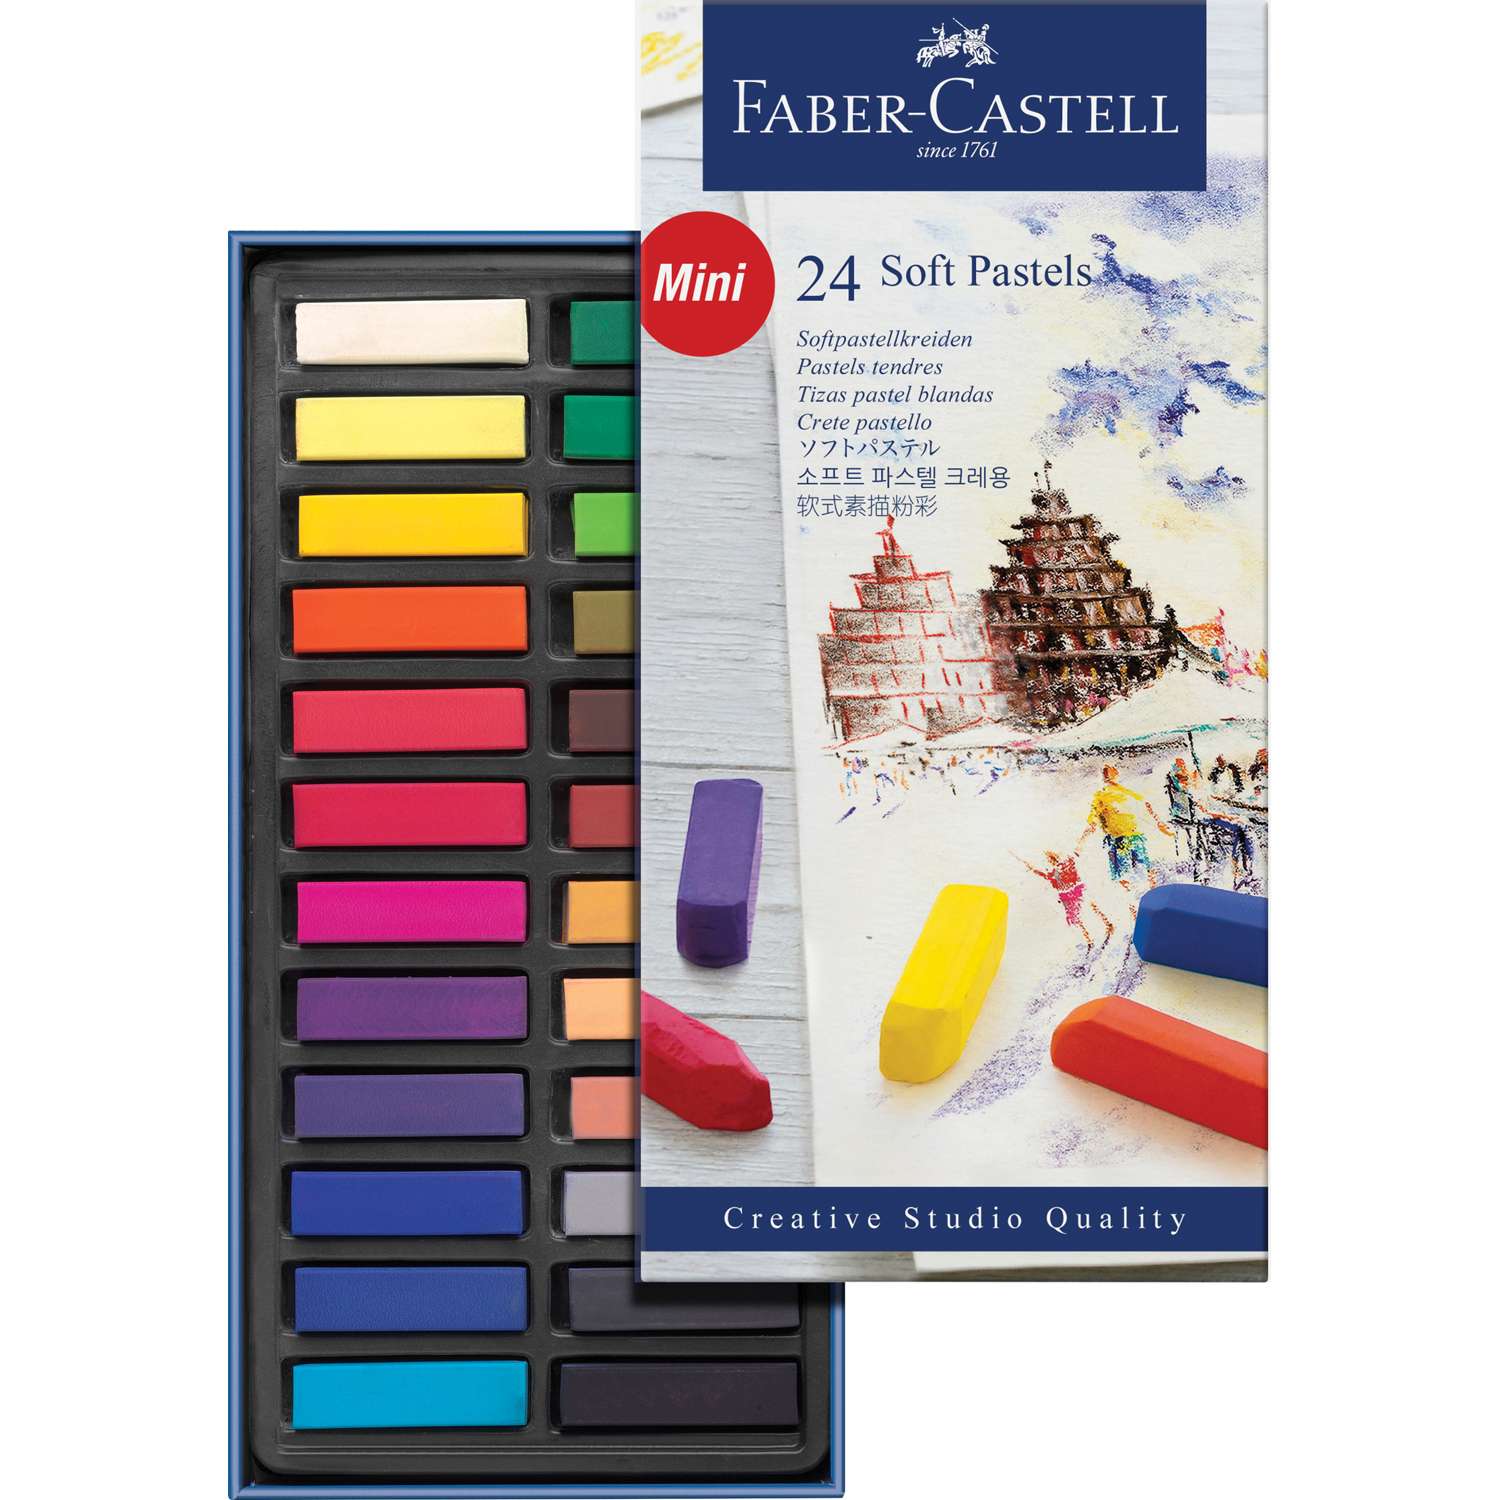 Пастель FABER CASTELL Soft pastels 24 цвета мини - фото 2